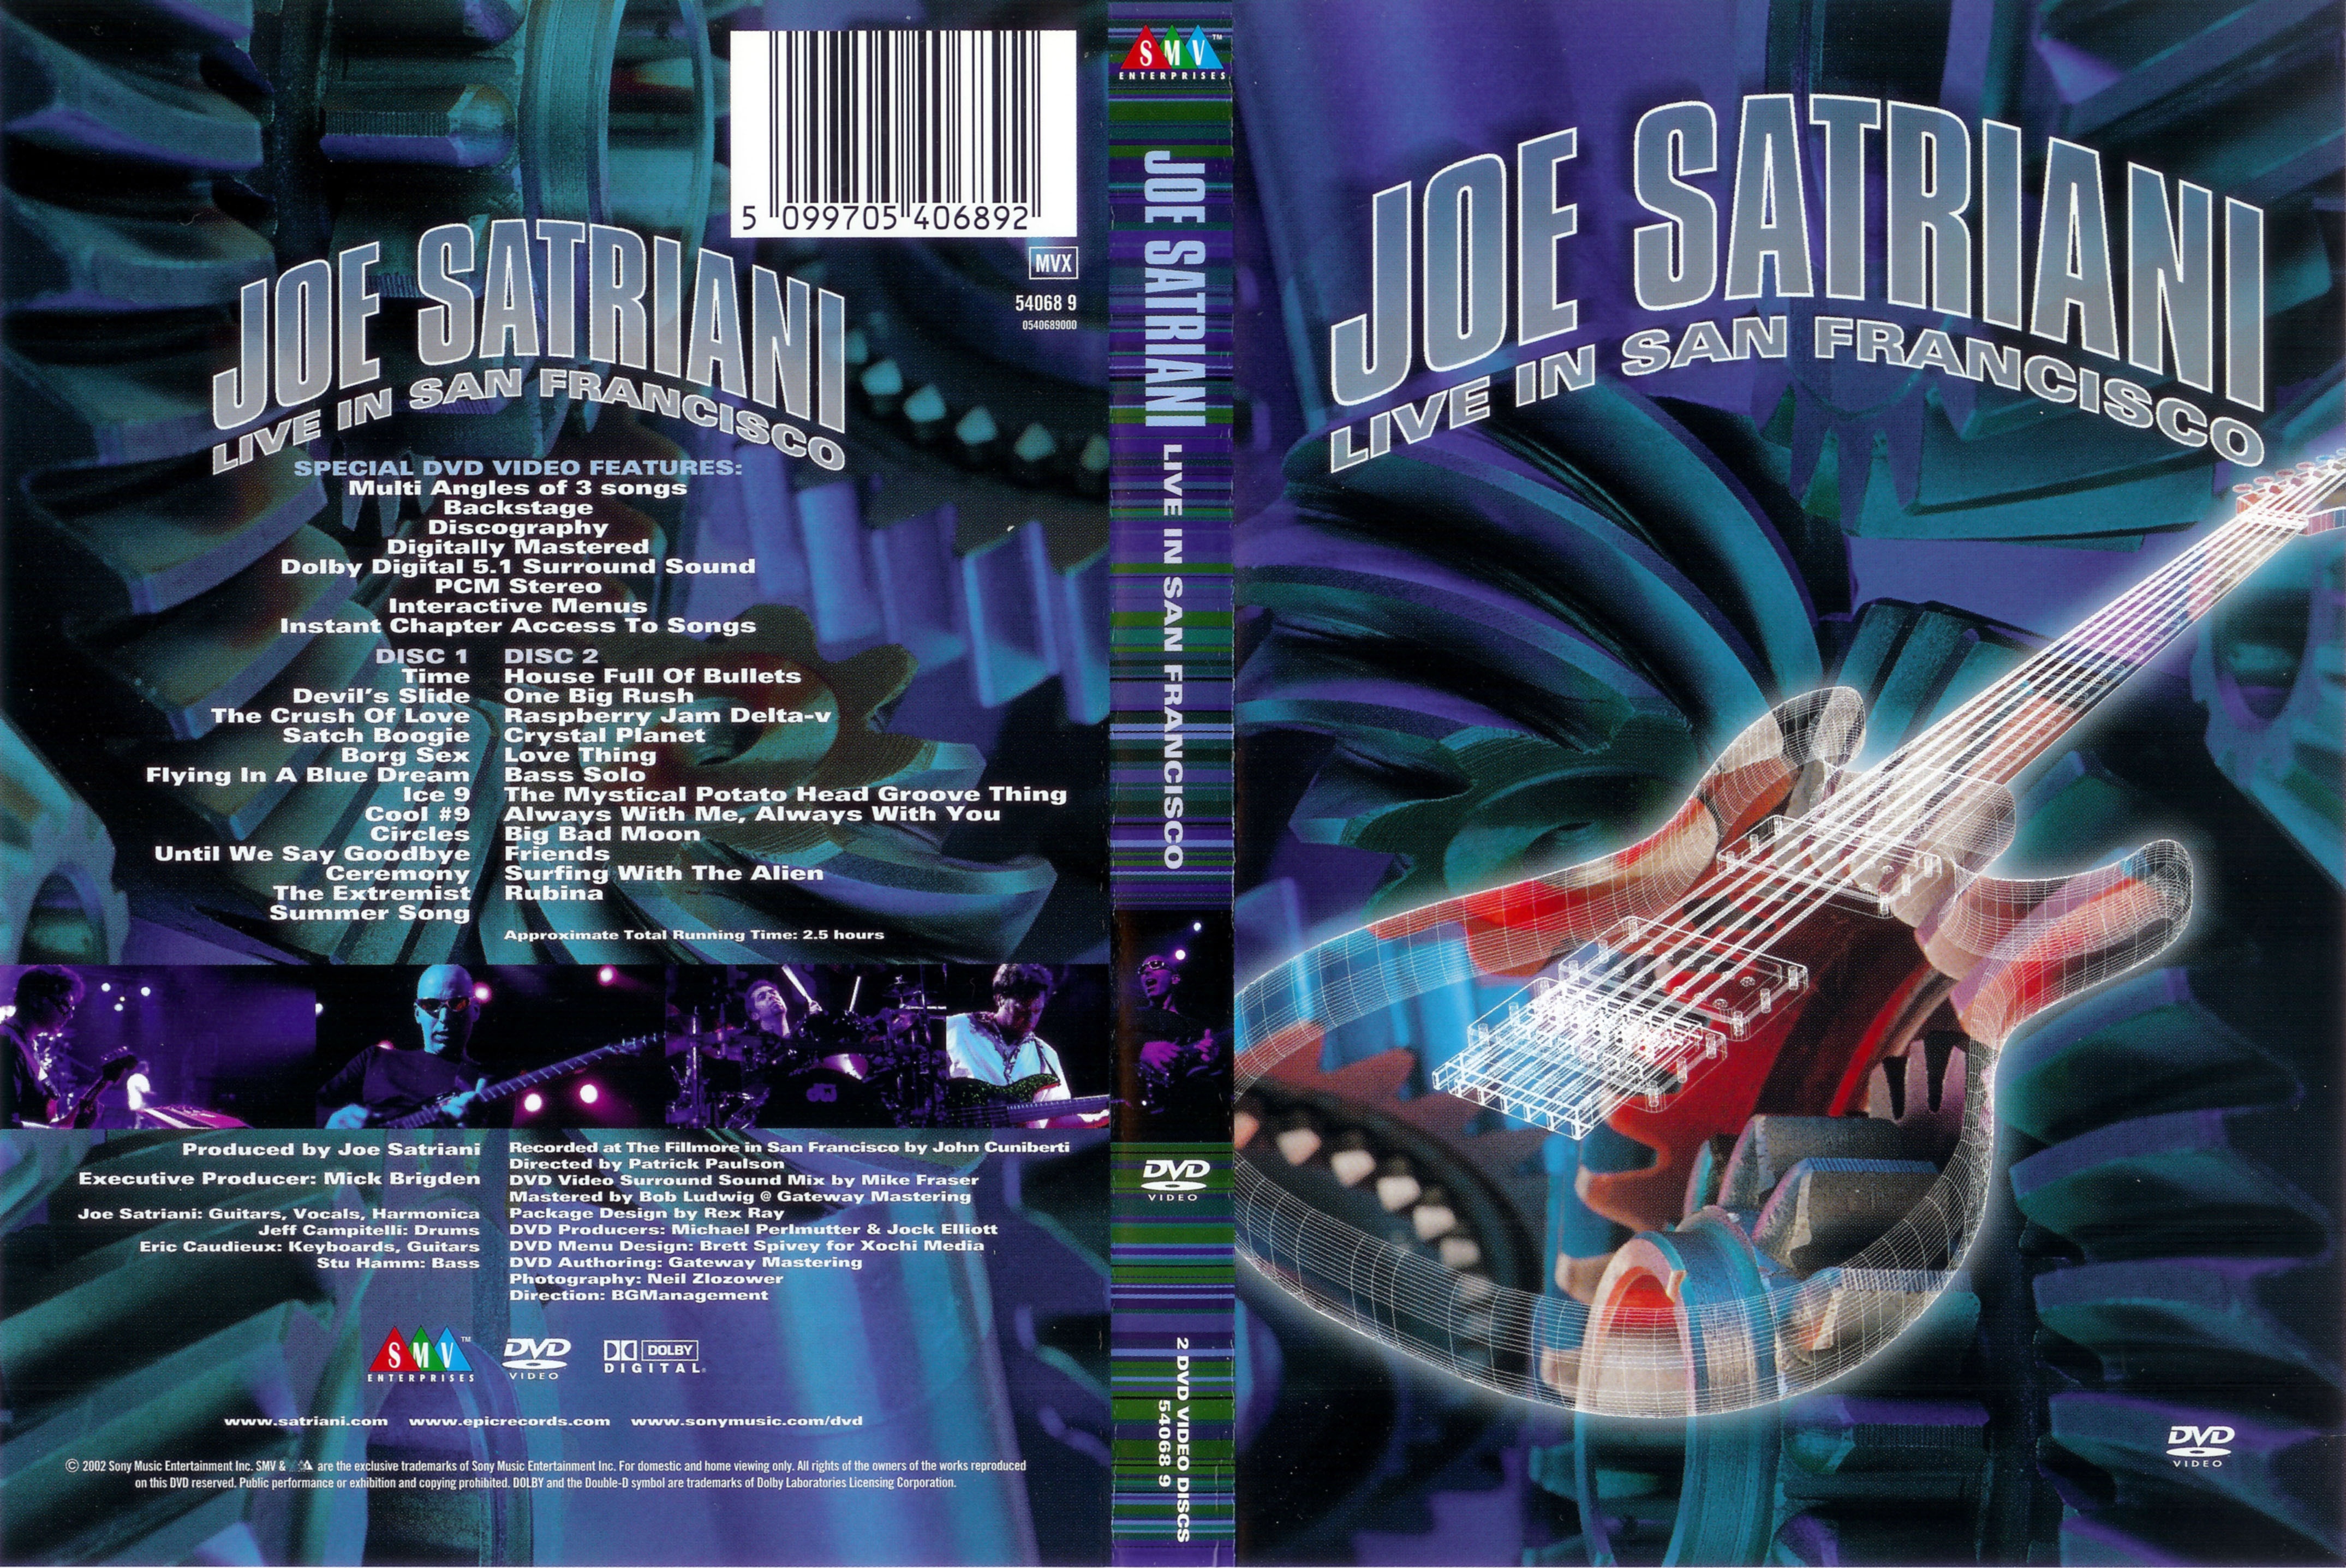 Jaquette DVD Joe Satriani live in San Francisco